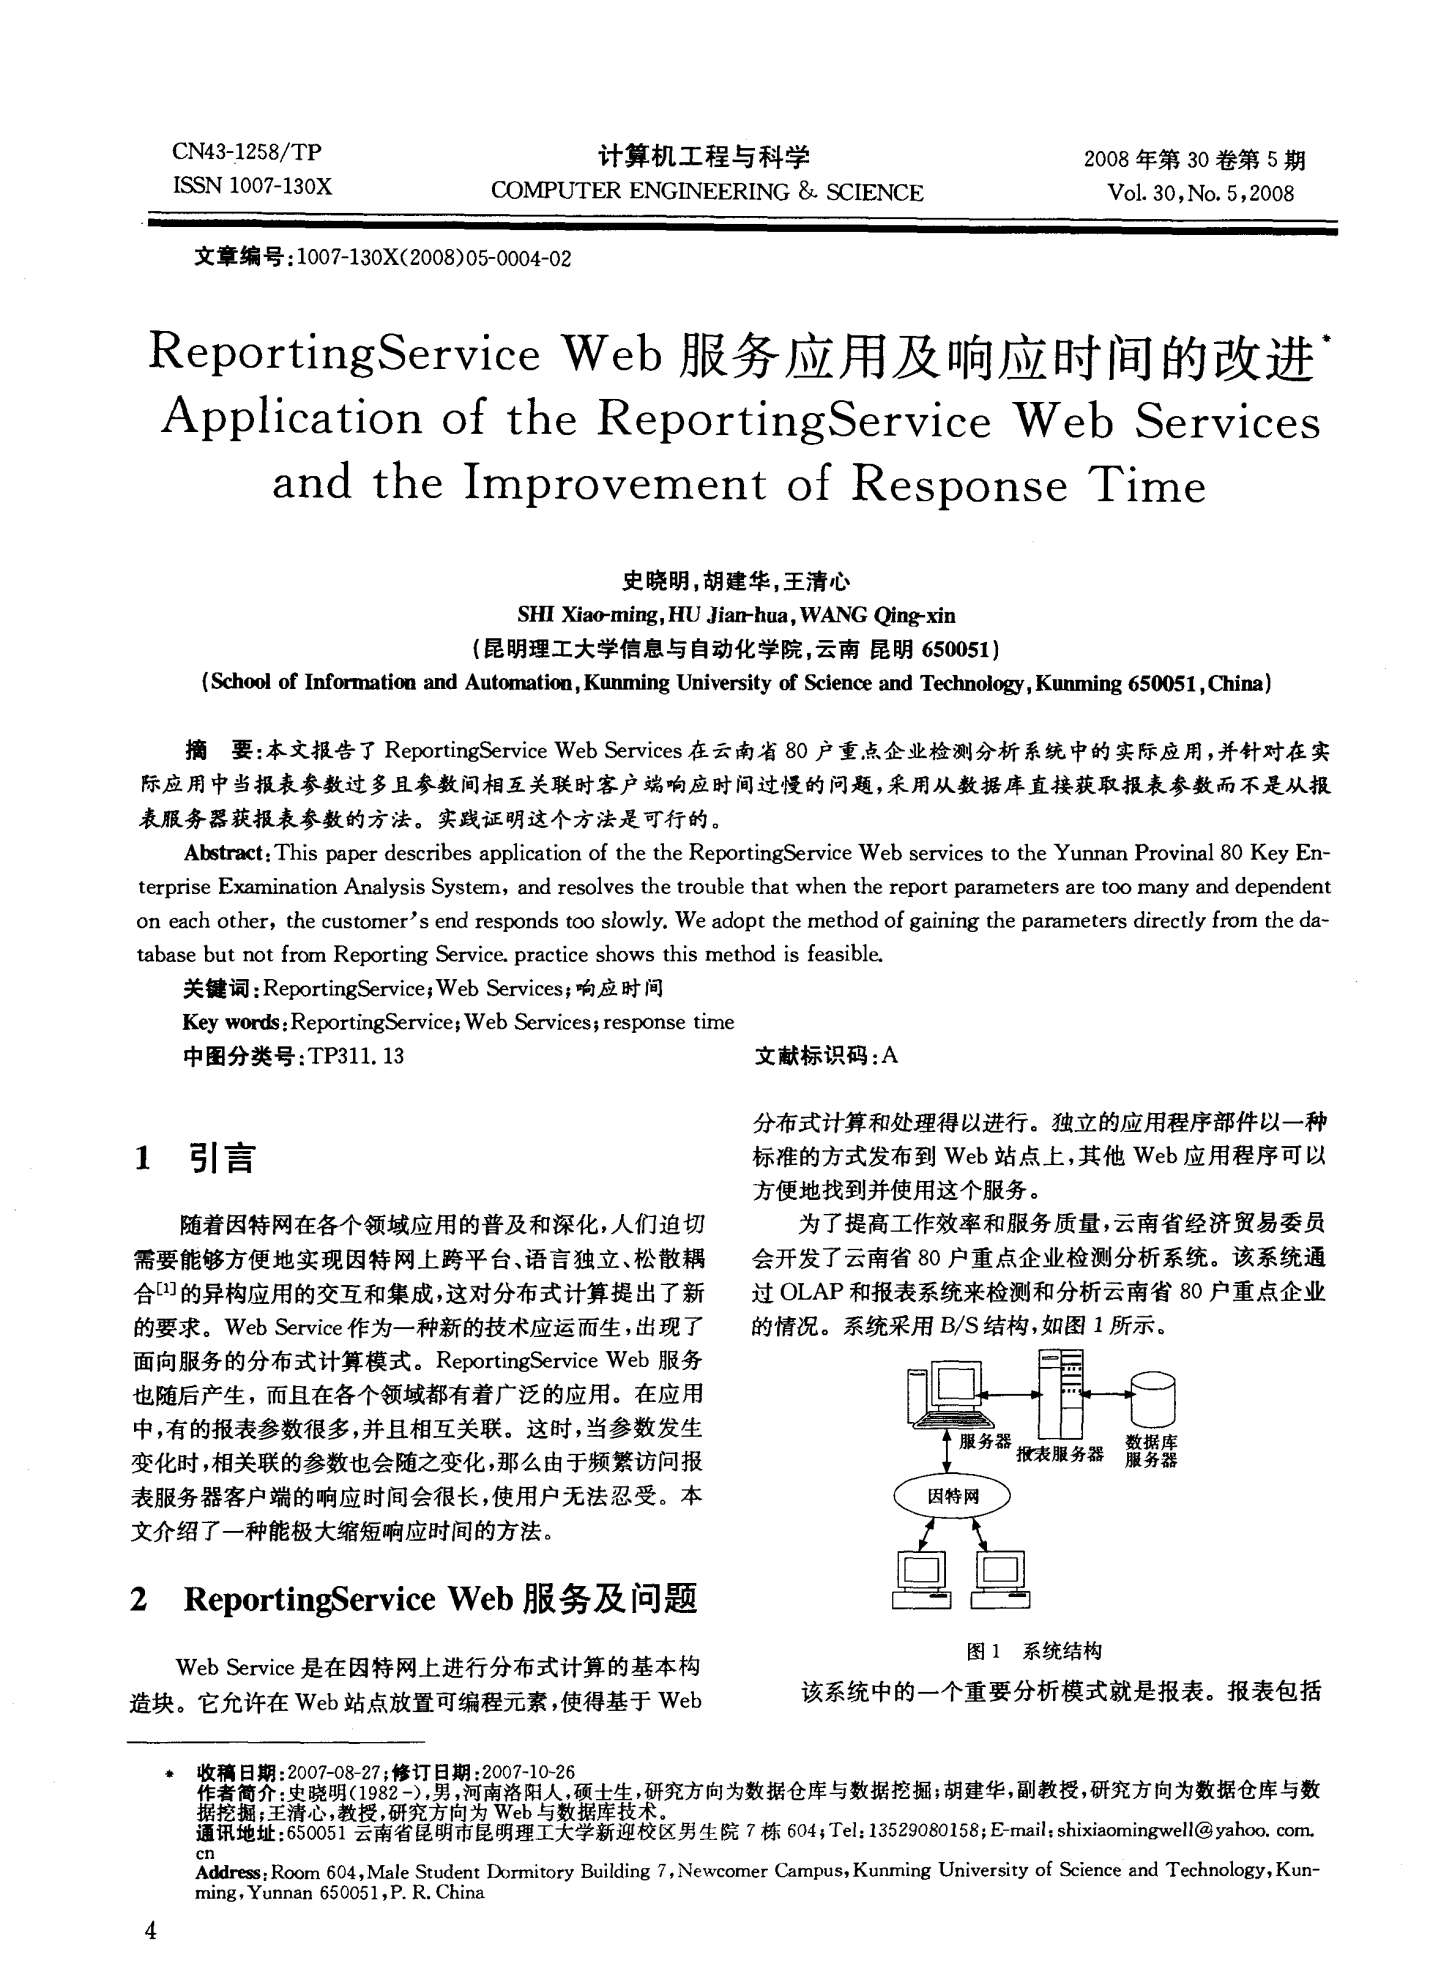 ReportingService Web服务应用及响应时间的改进